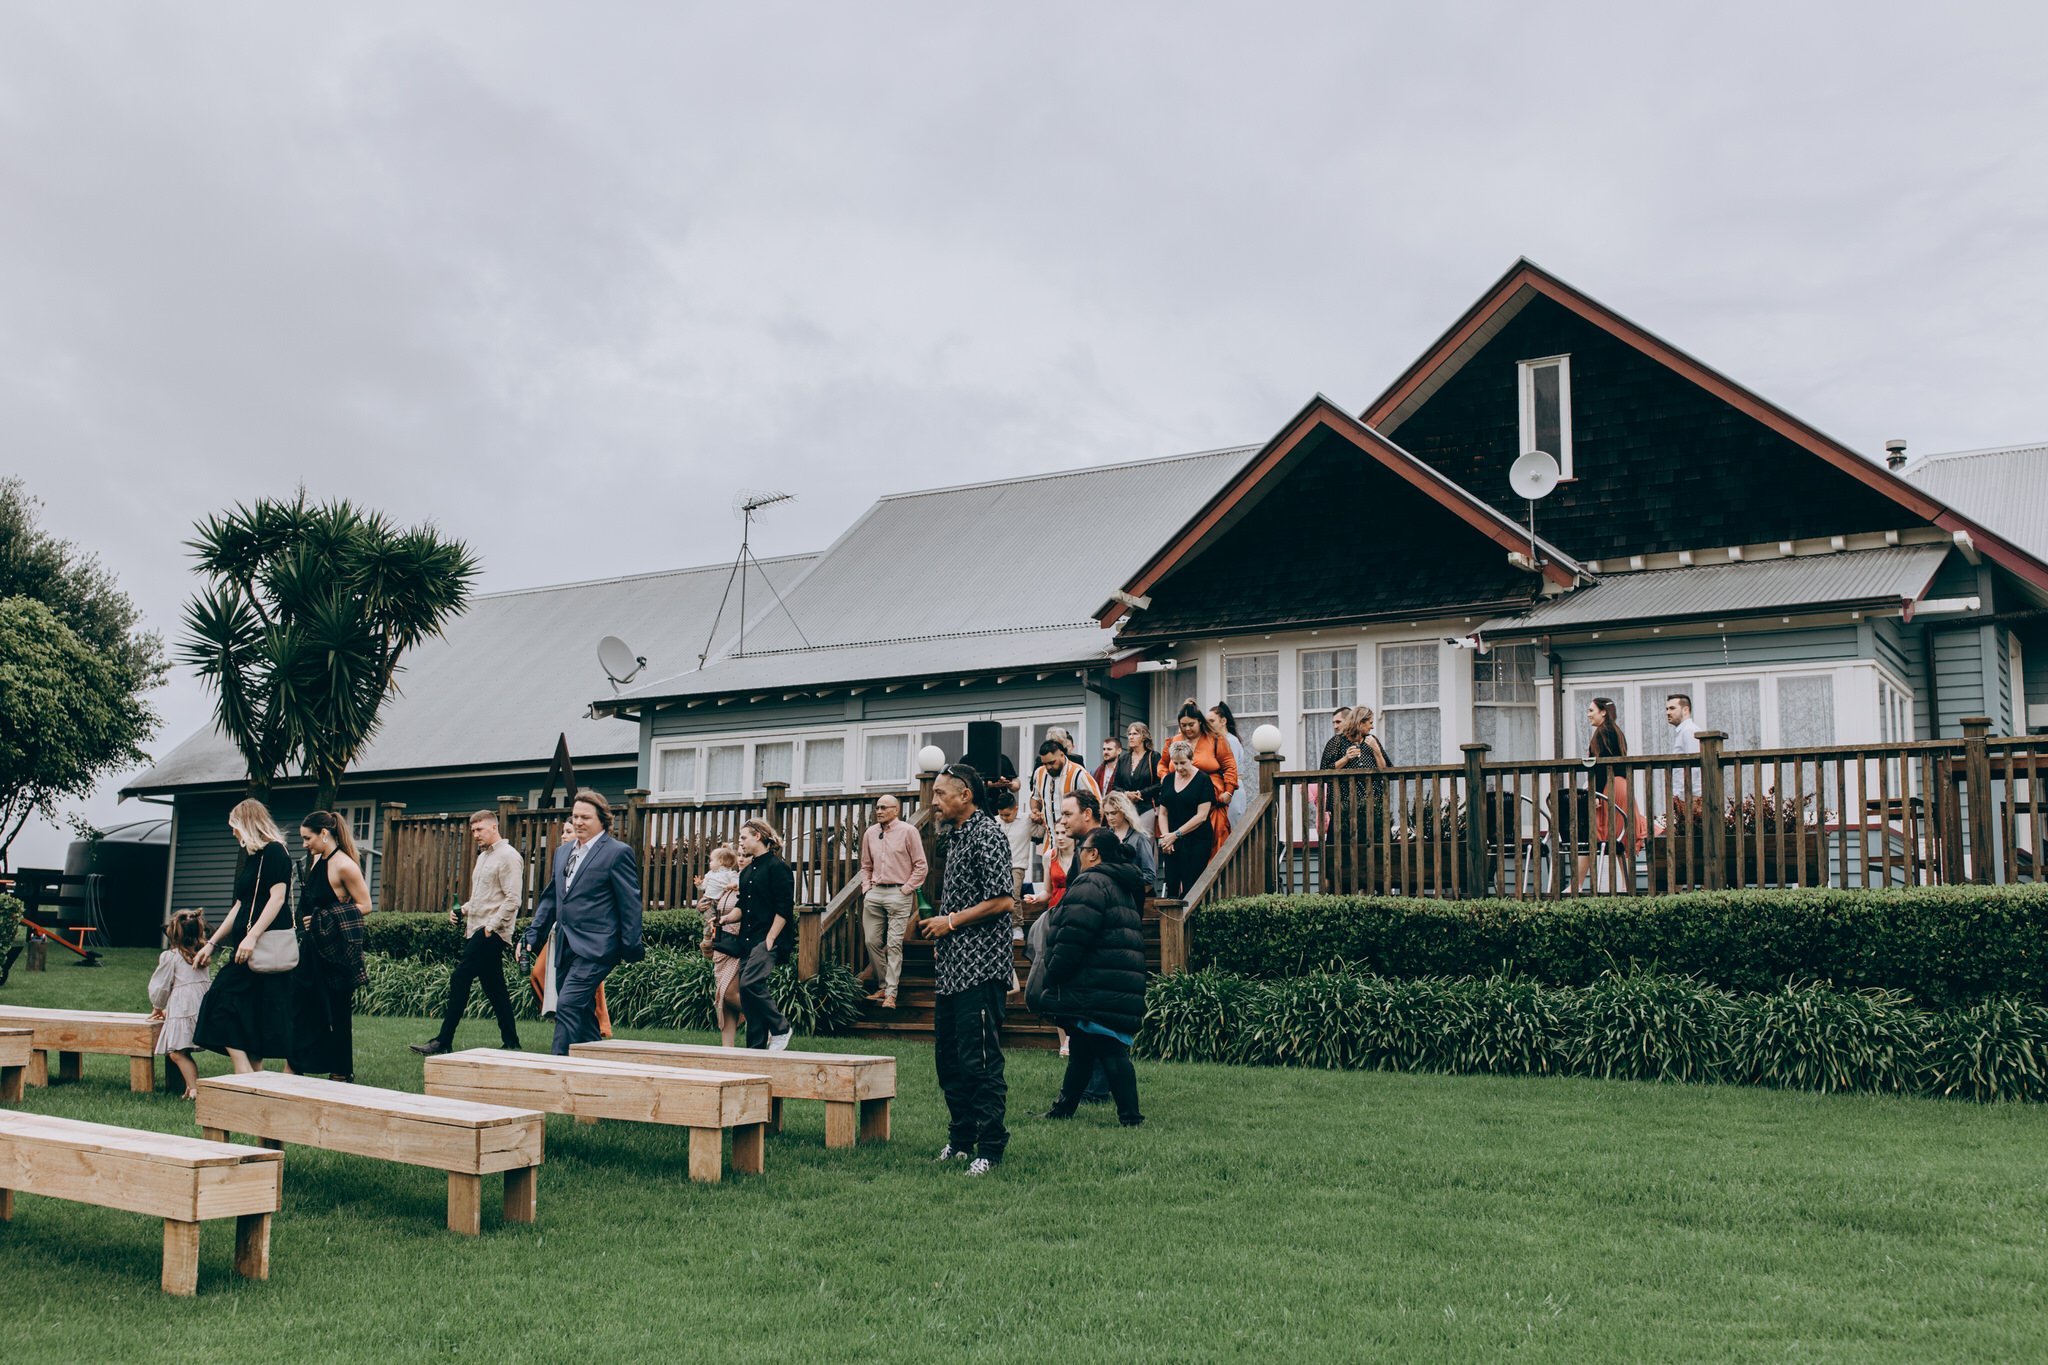 Connemara Country lodge Auckland wedding 31.jpg